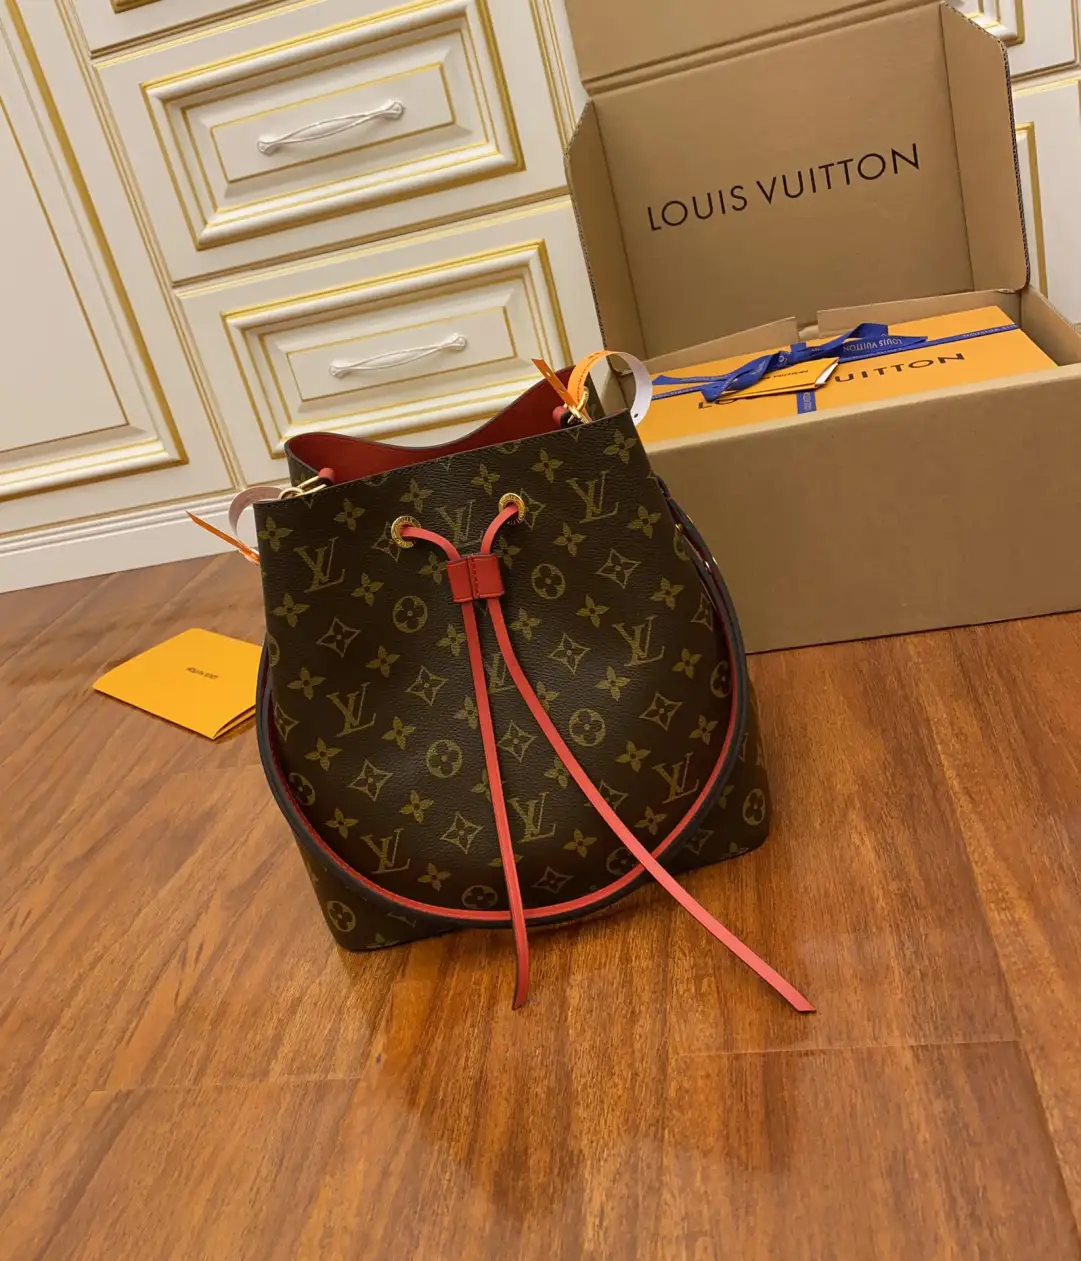 Replica Louis Vuitton Neonoe Bucket Bags